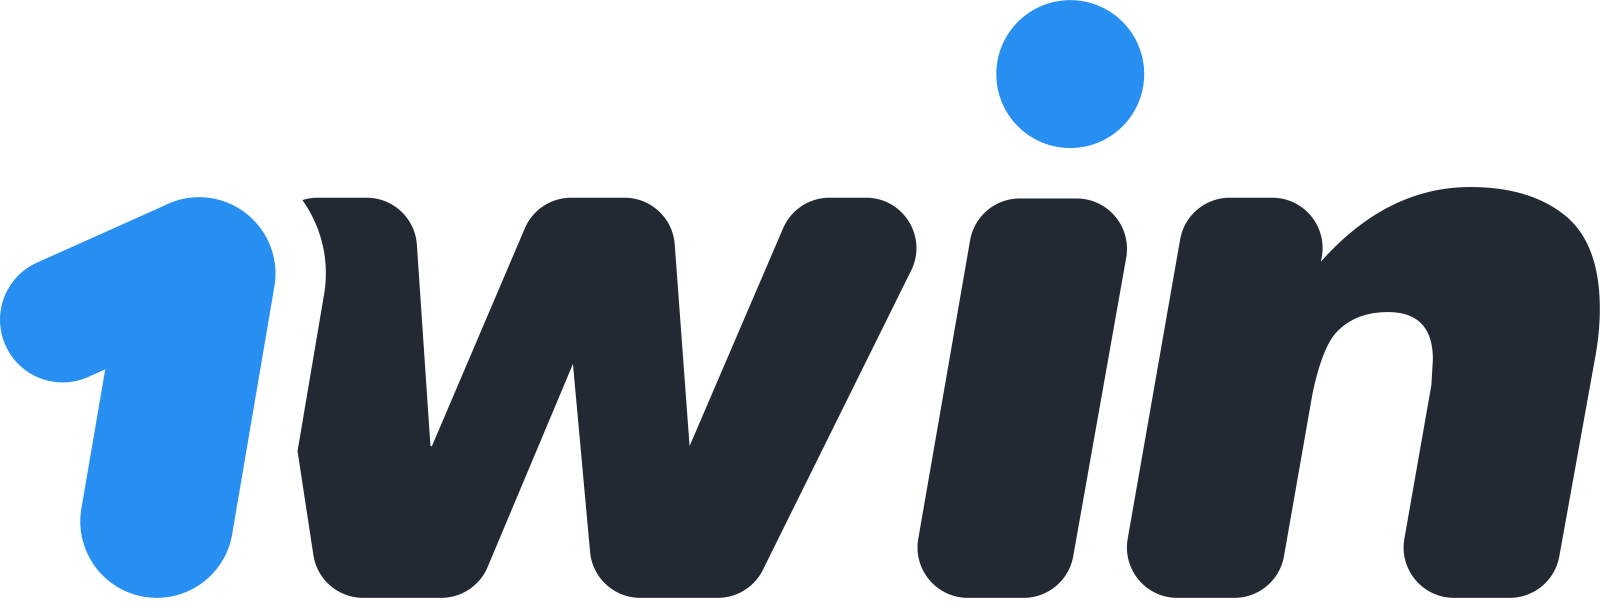 1Win casino logo